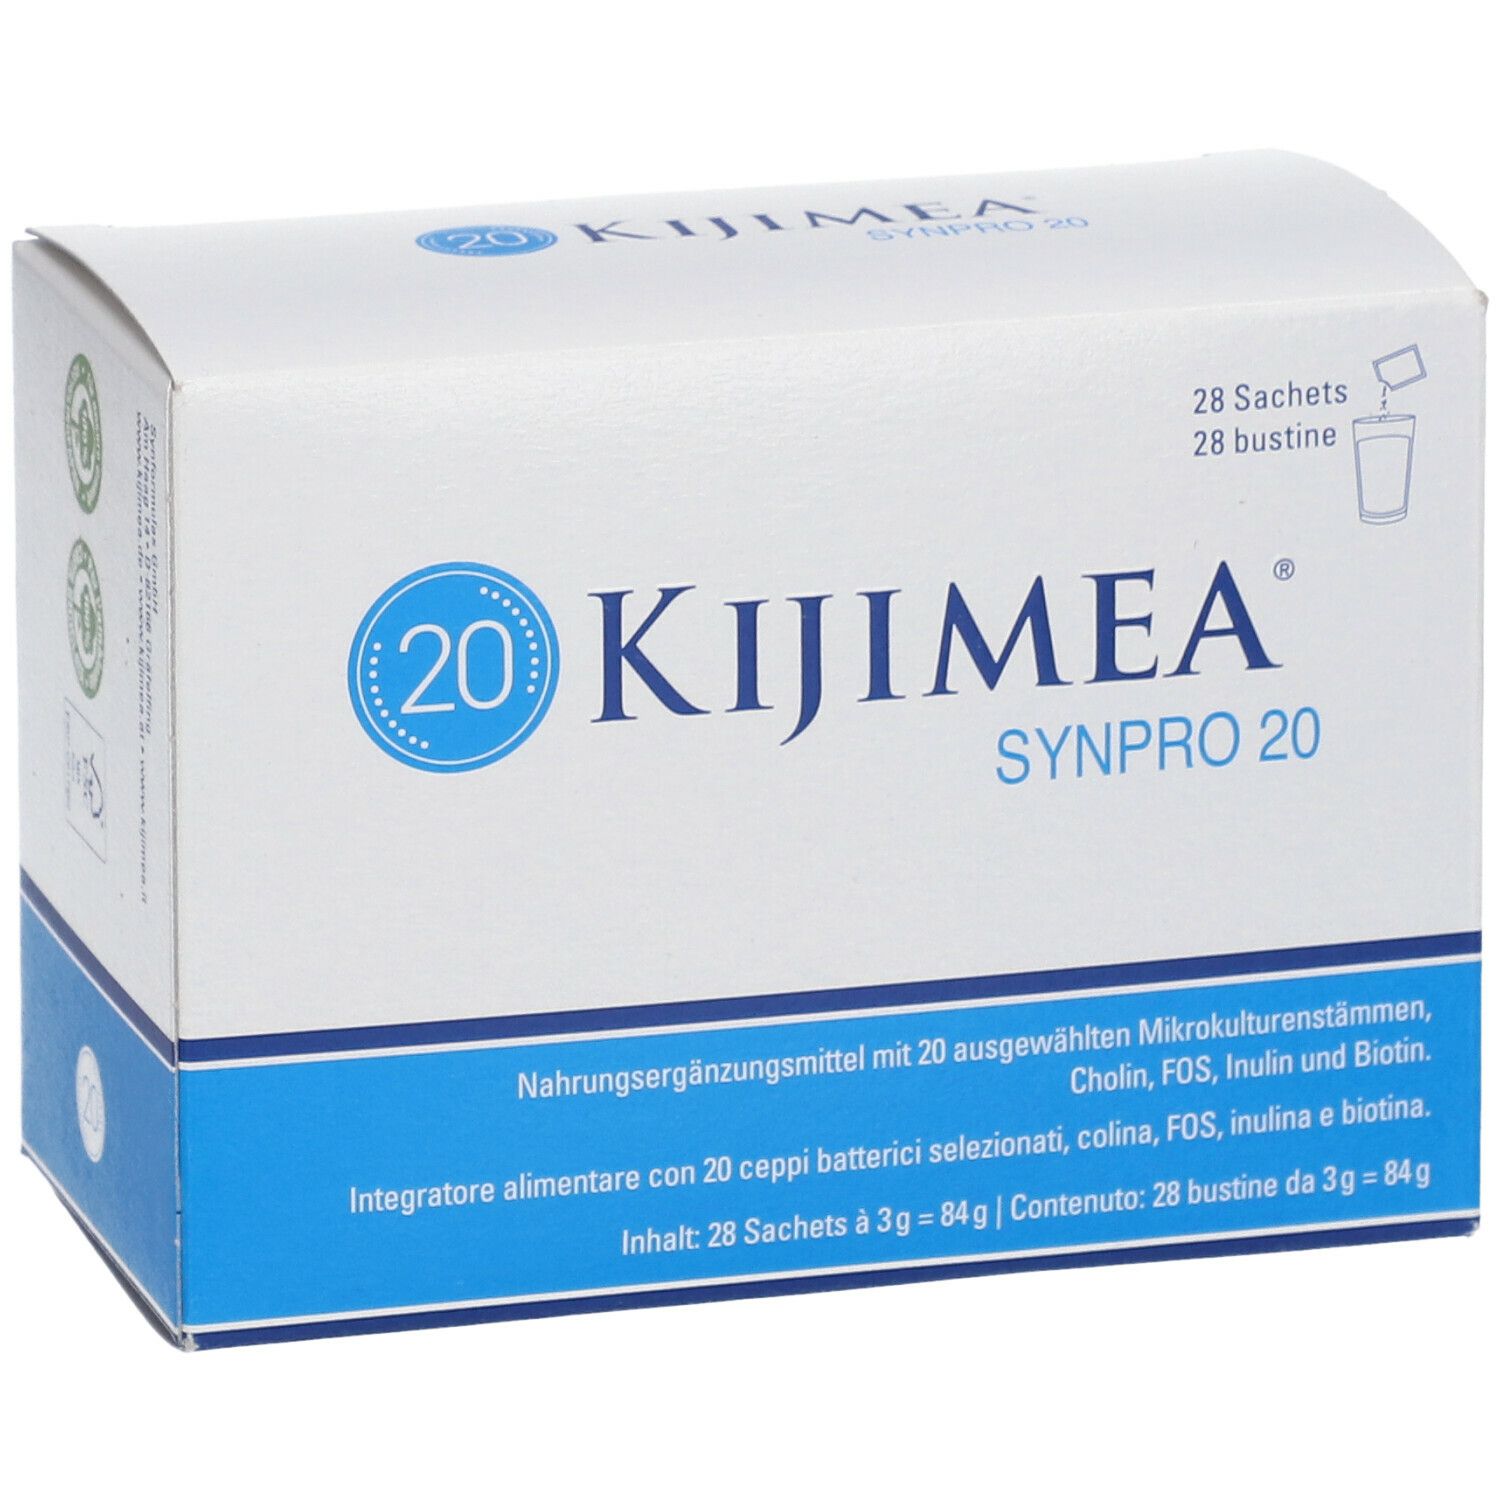 KIJIMEA® Synpro 20